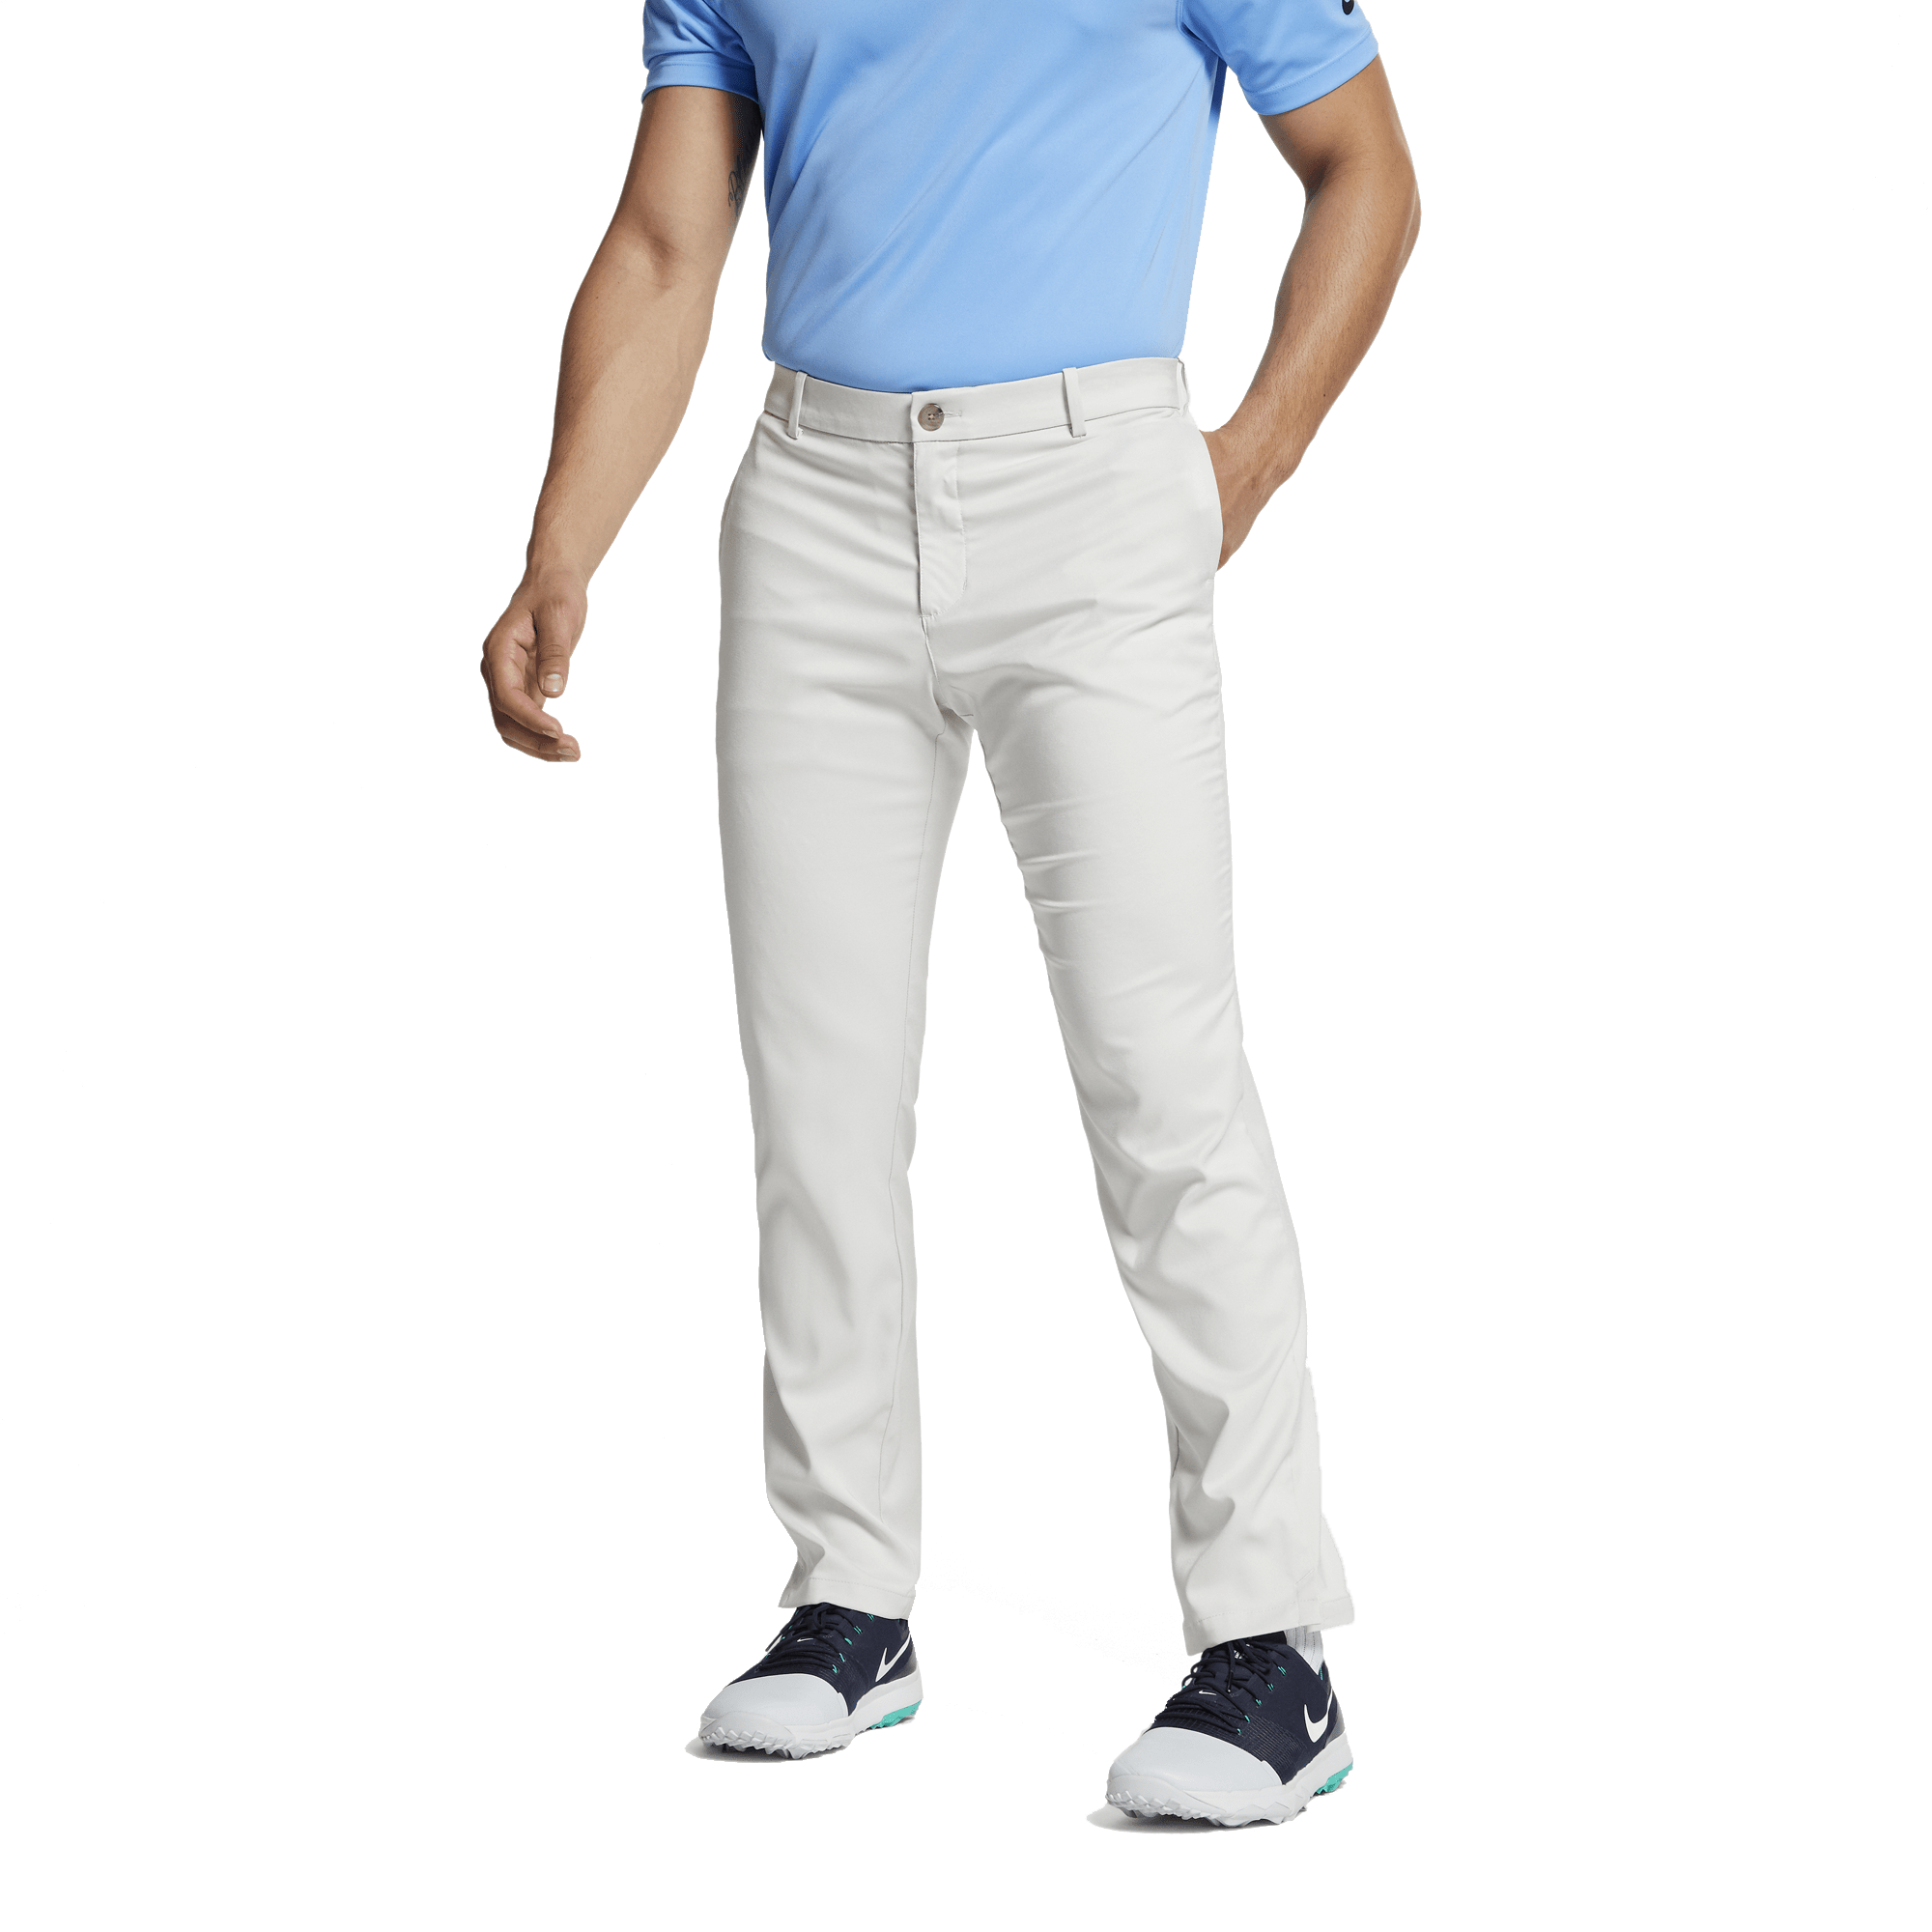 flex golf pants